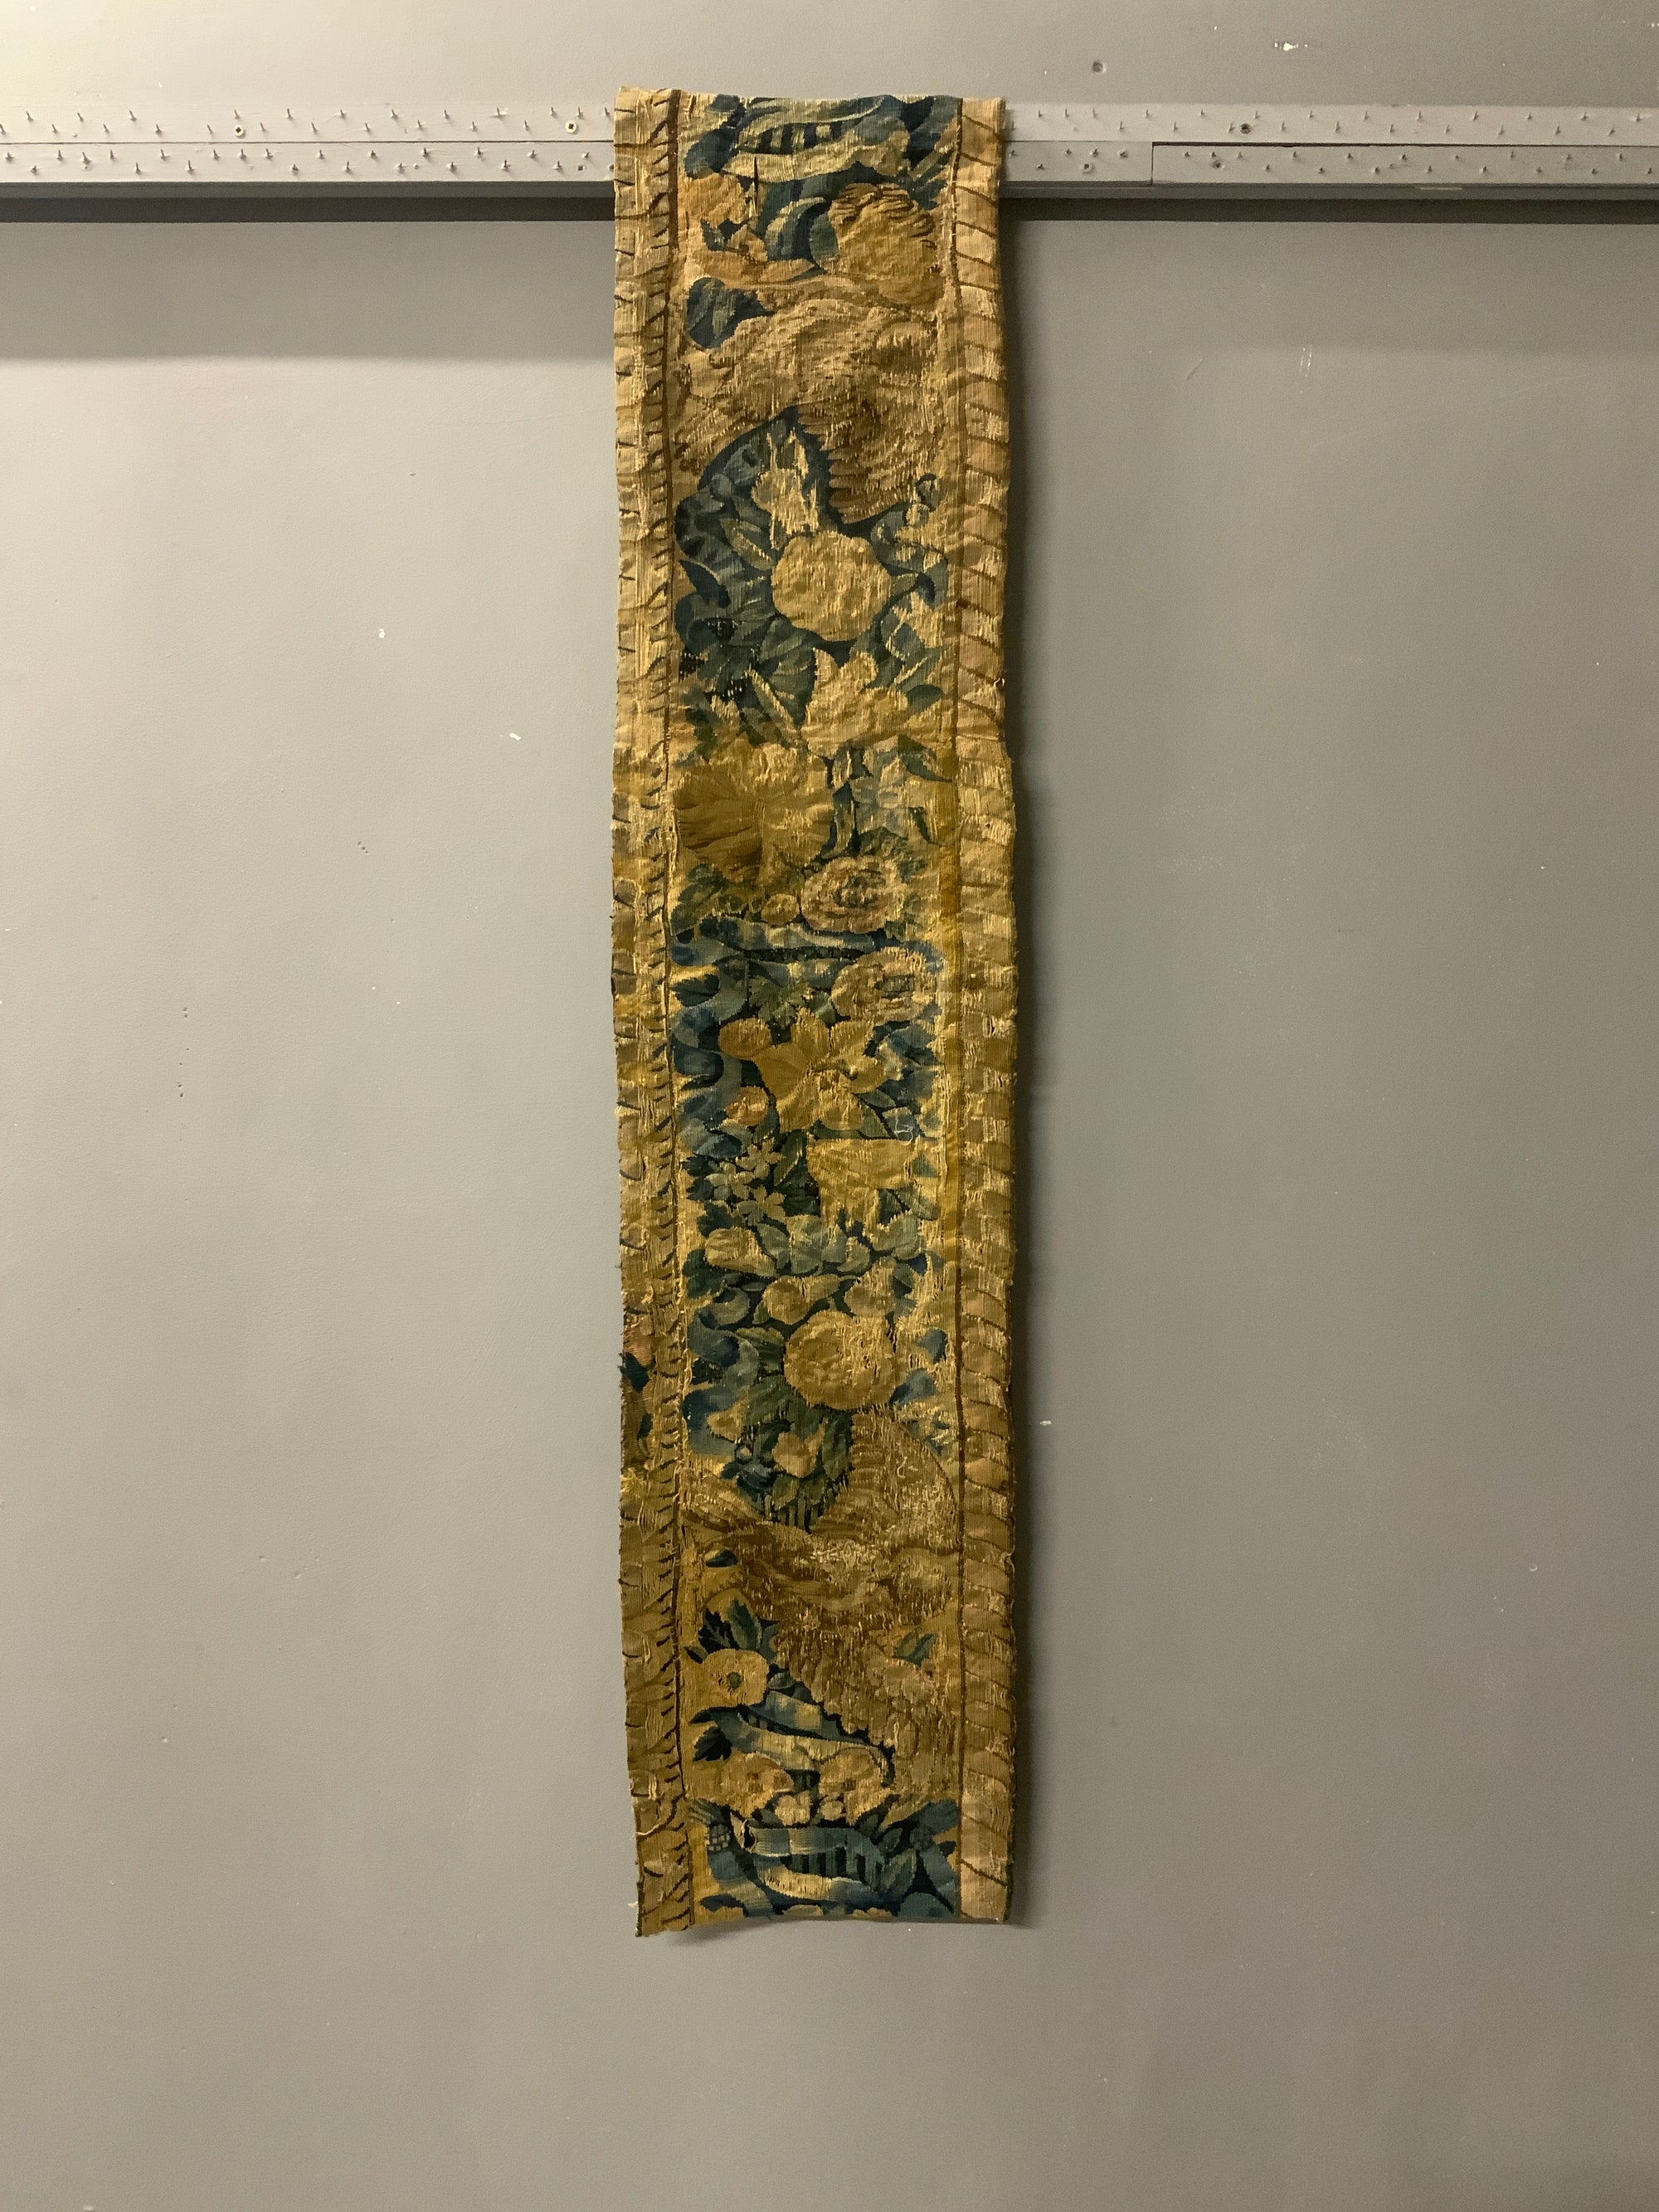 Franco - Flemish tapestry border fragment (29 x 130cm)